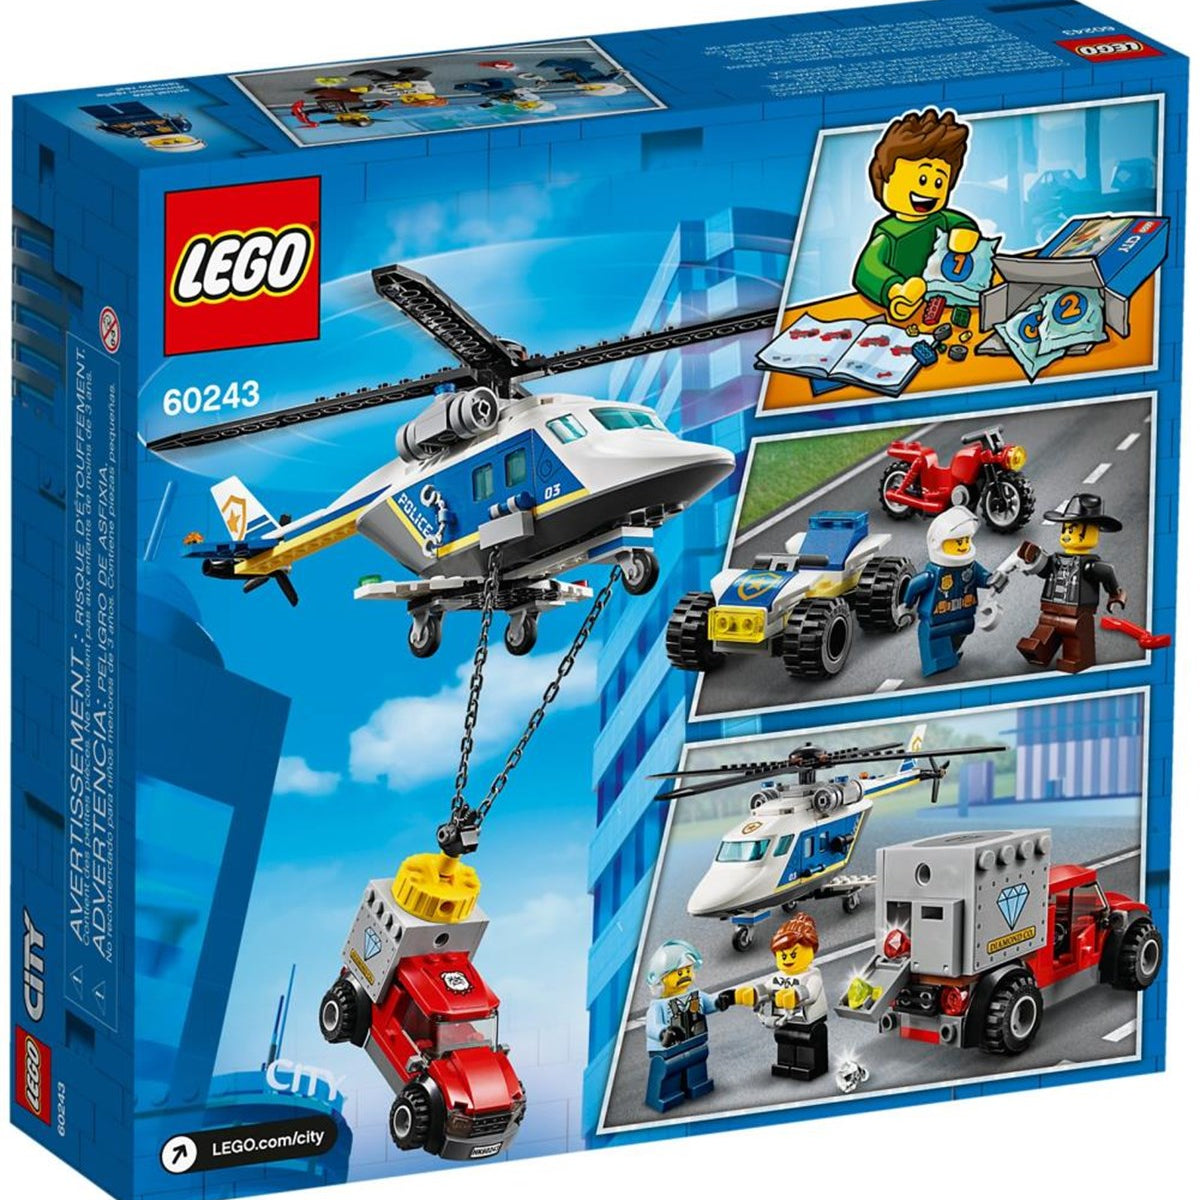 Lego City Polis Helikopteri Takibi 60243 | Toysall